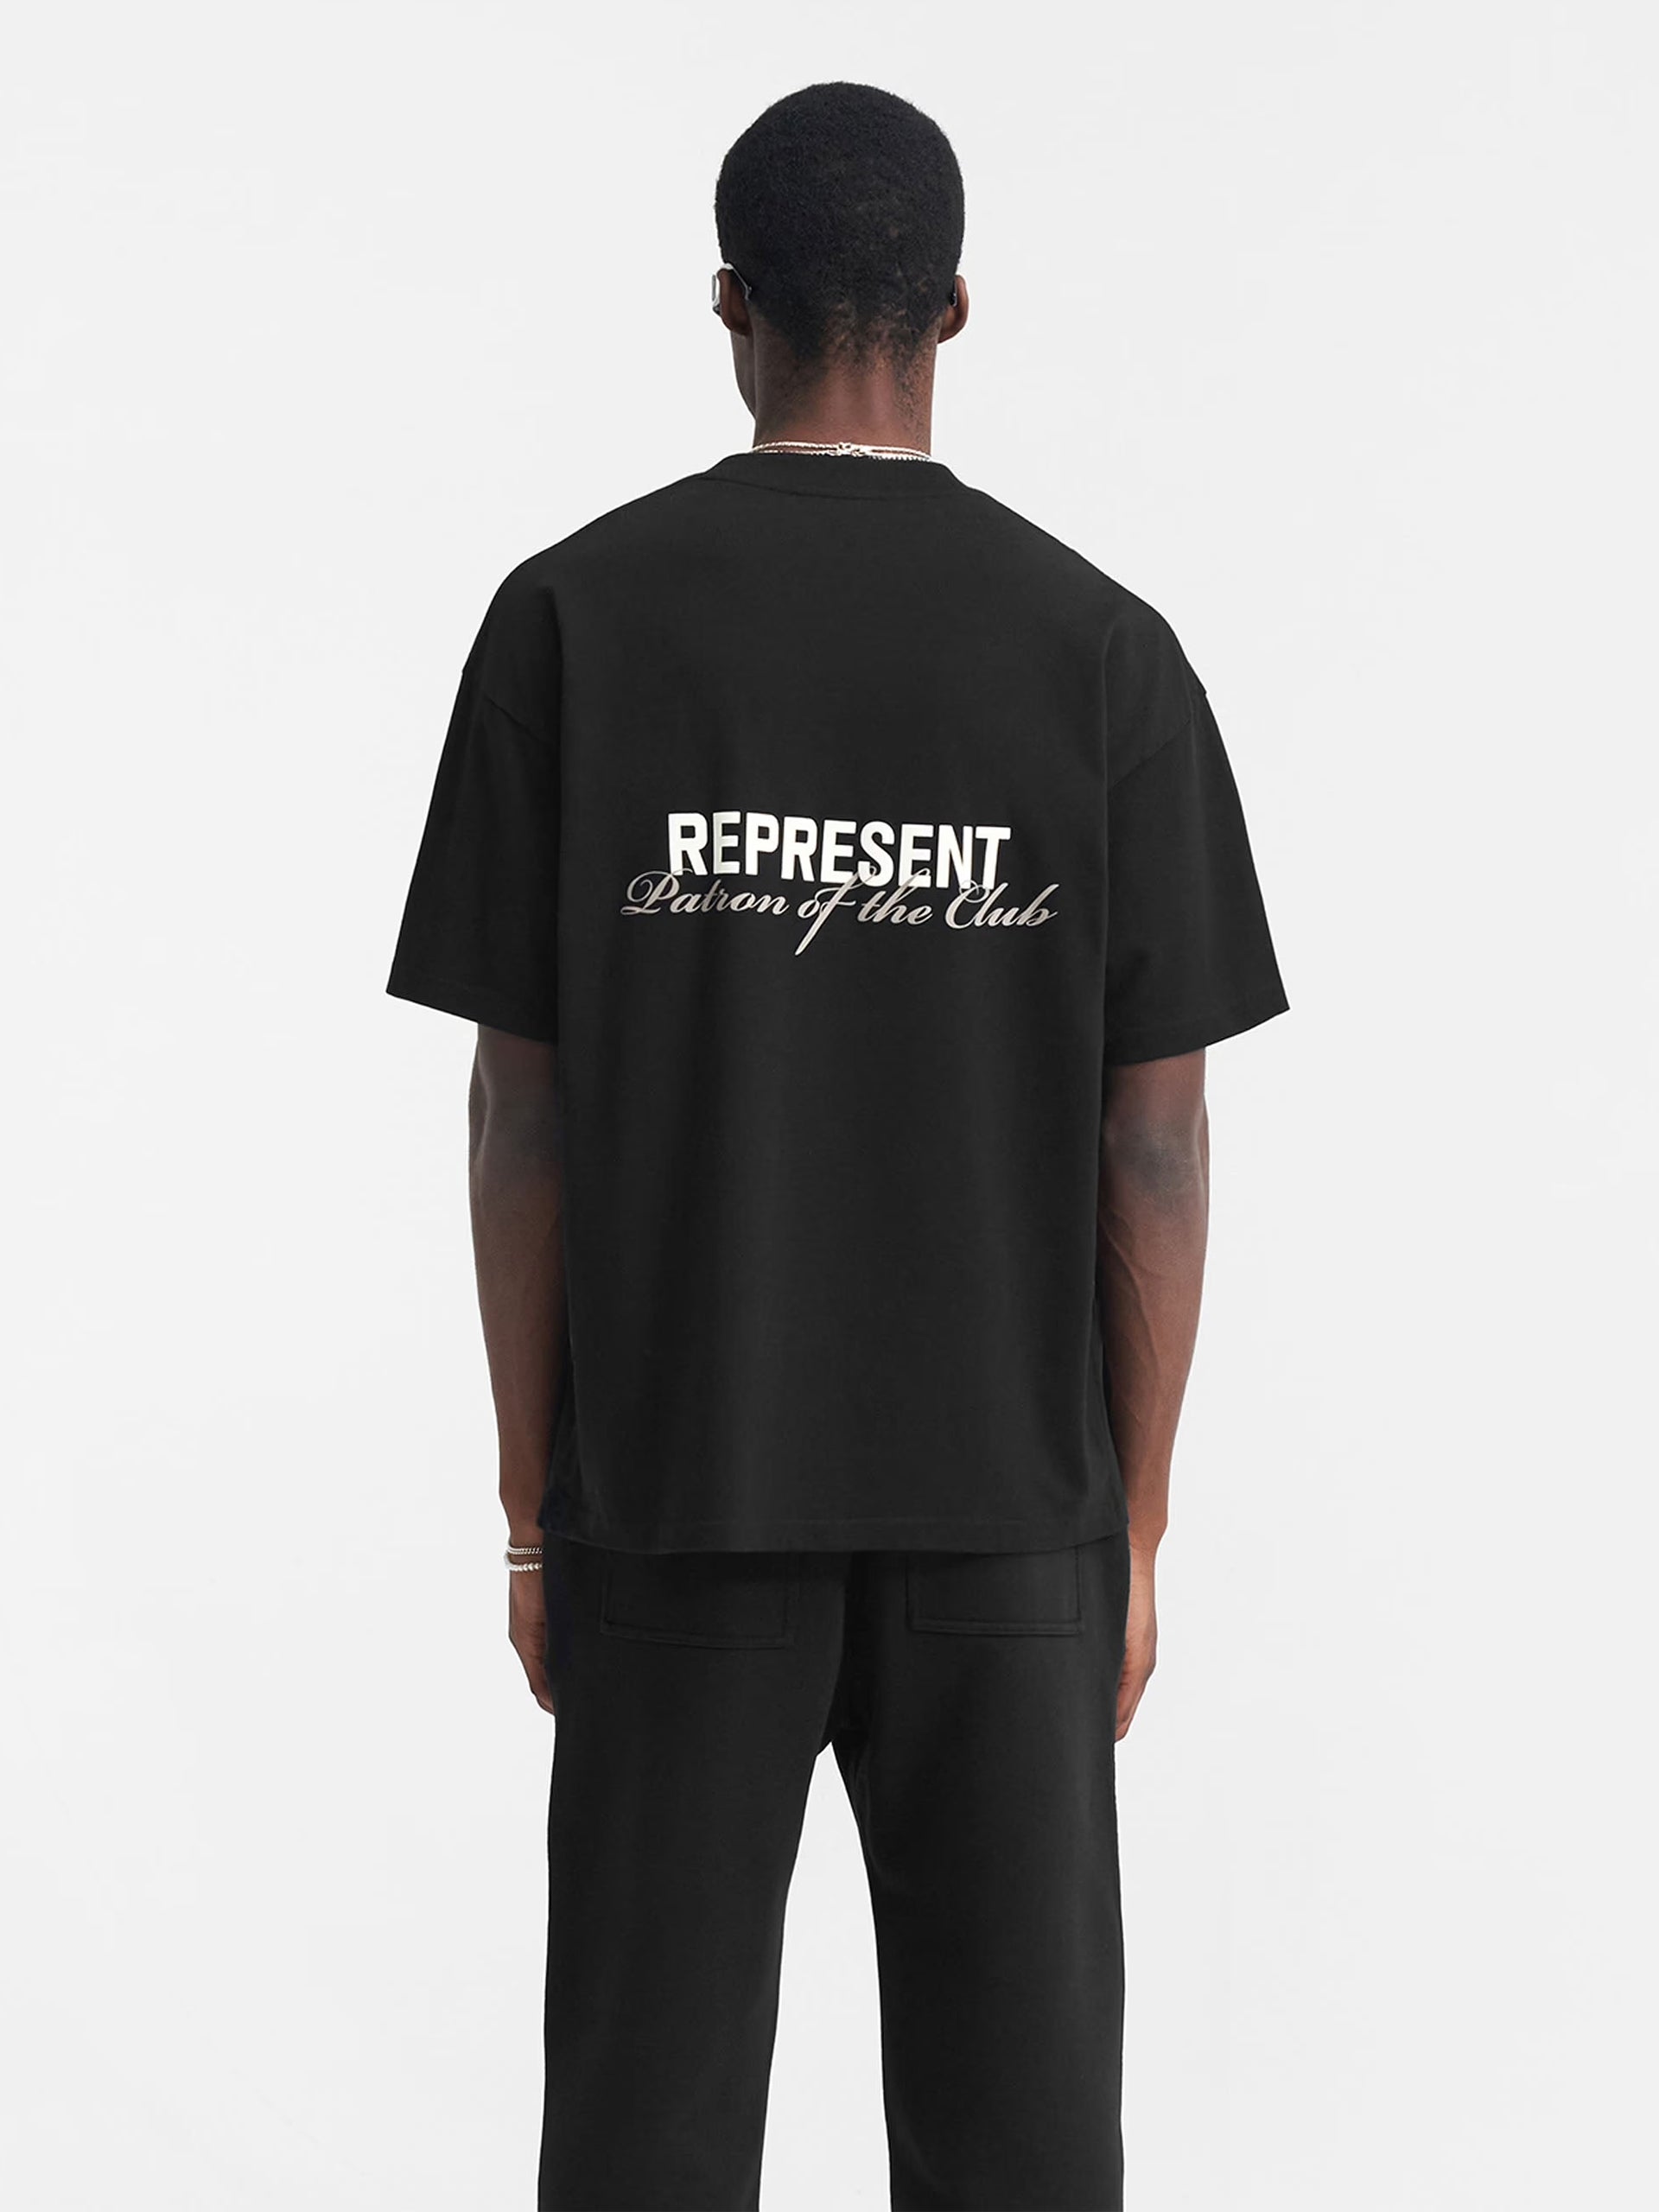 REPRESENT - Patron Of The Club T-Shirt